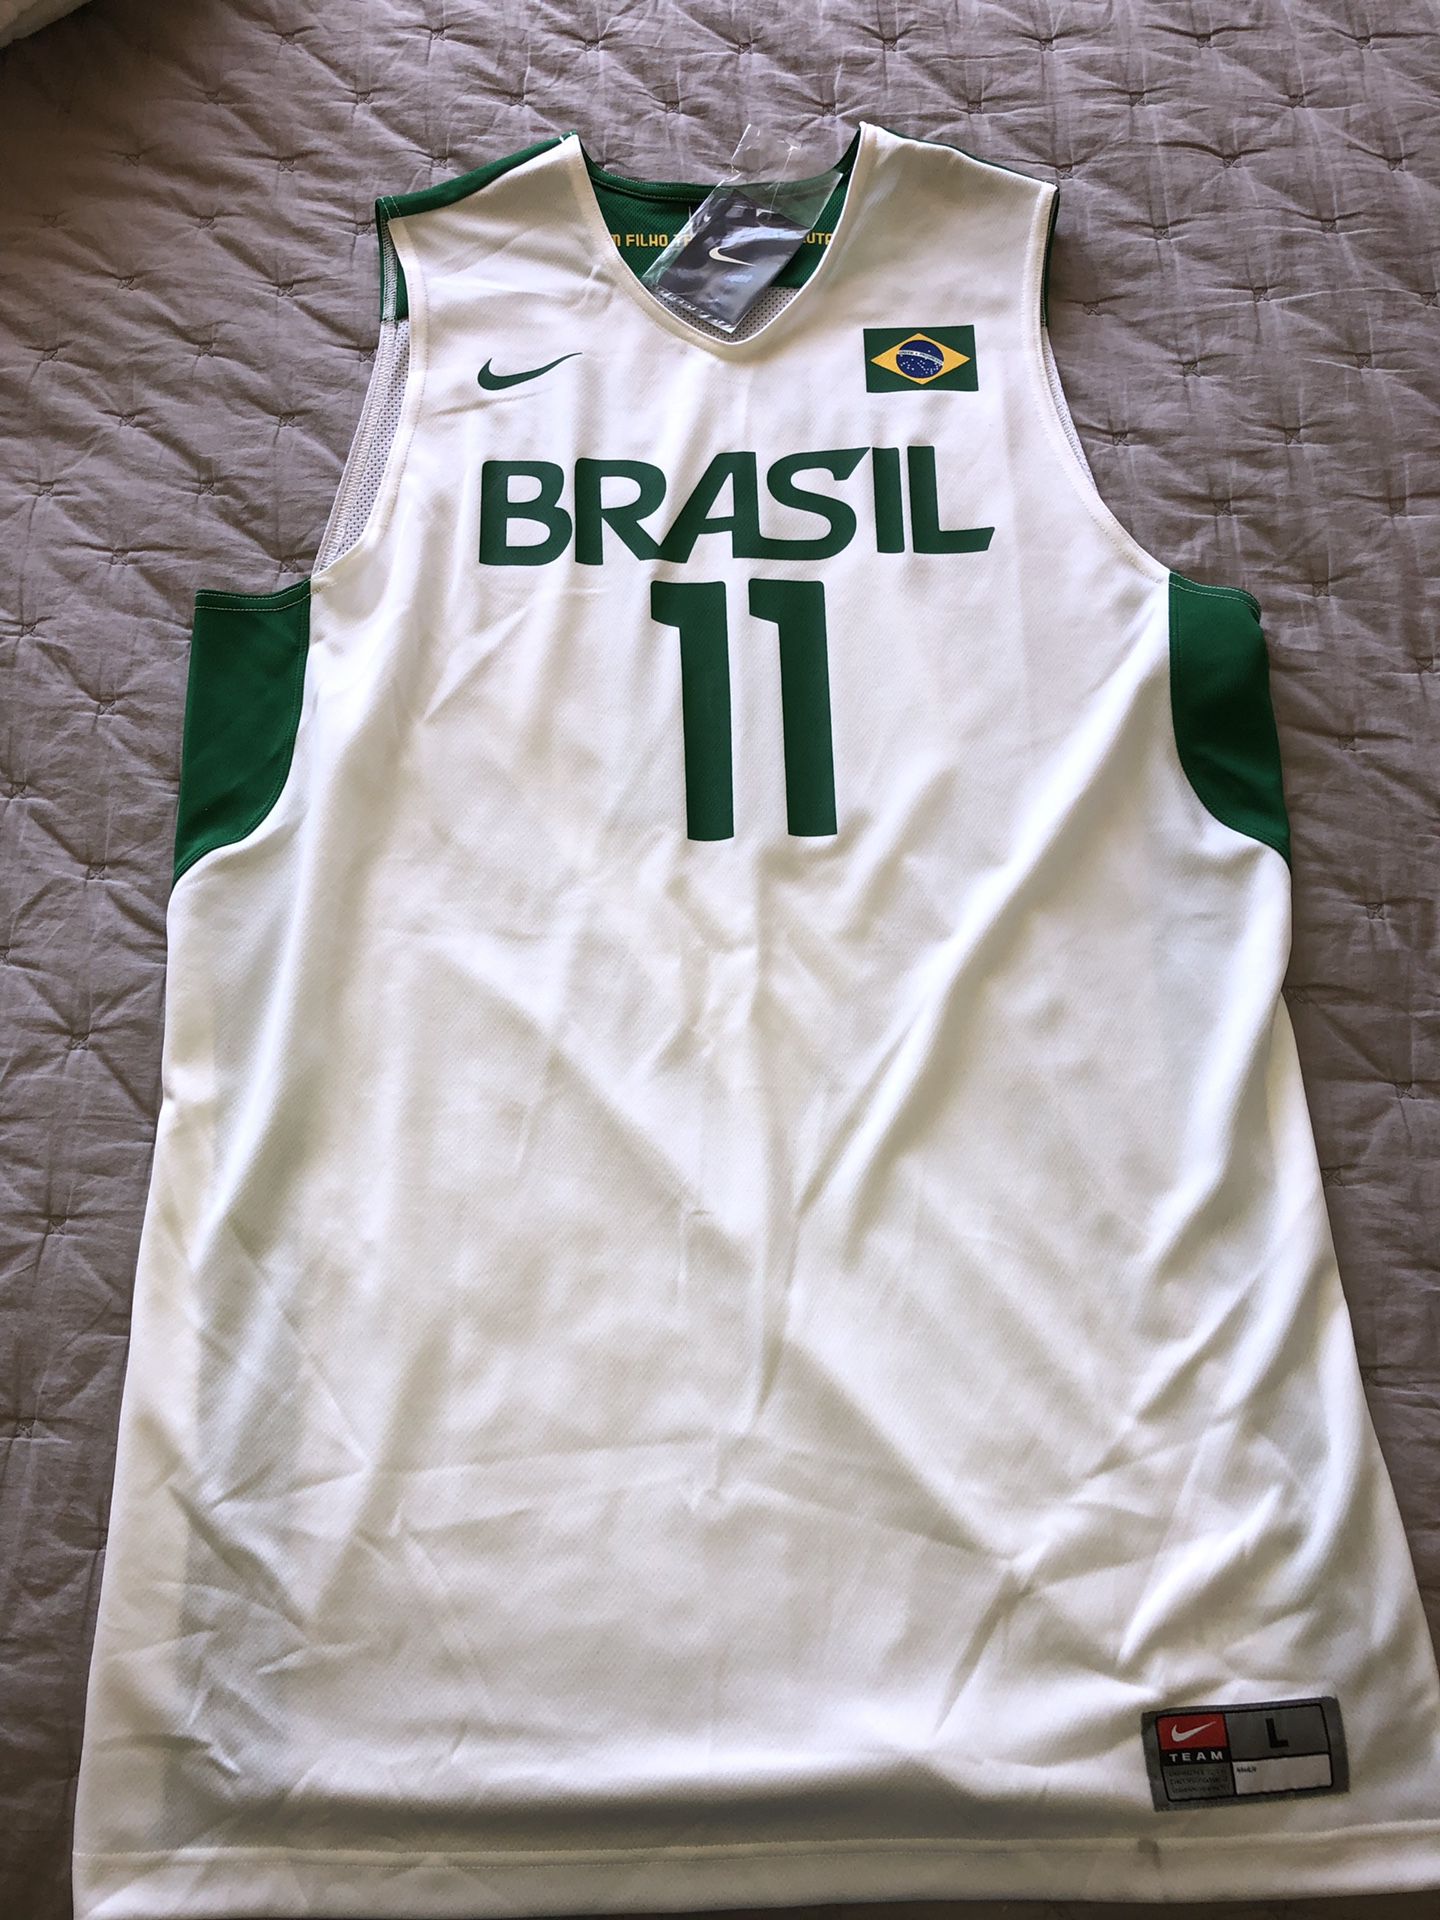 🏀 Anderson Varejao Brazil Basketball Jersey Size Small – The